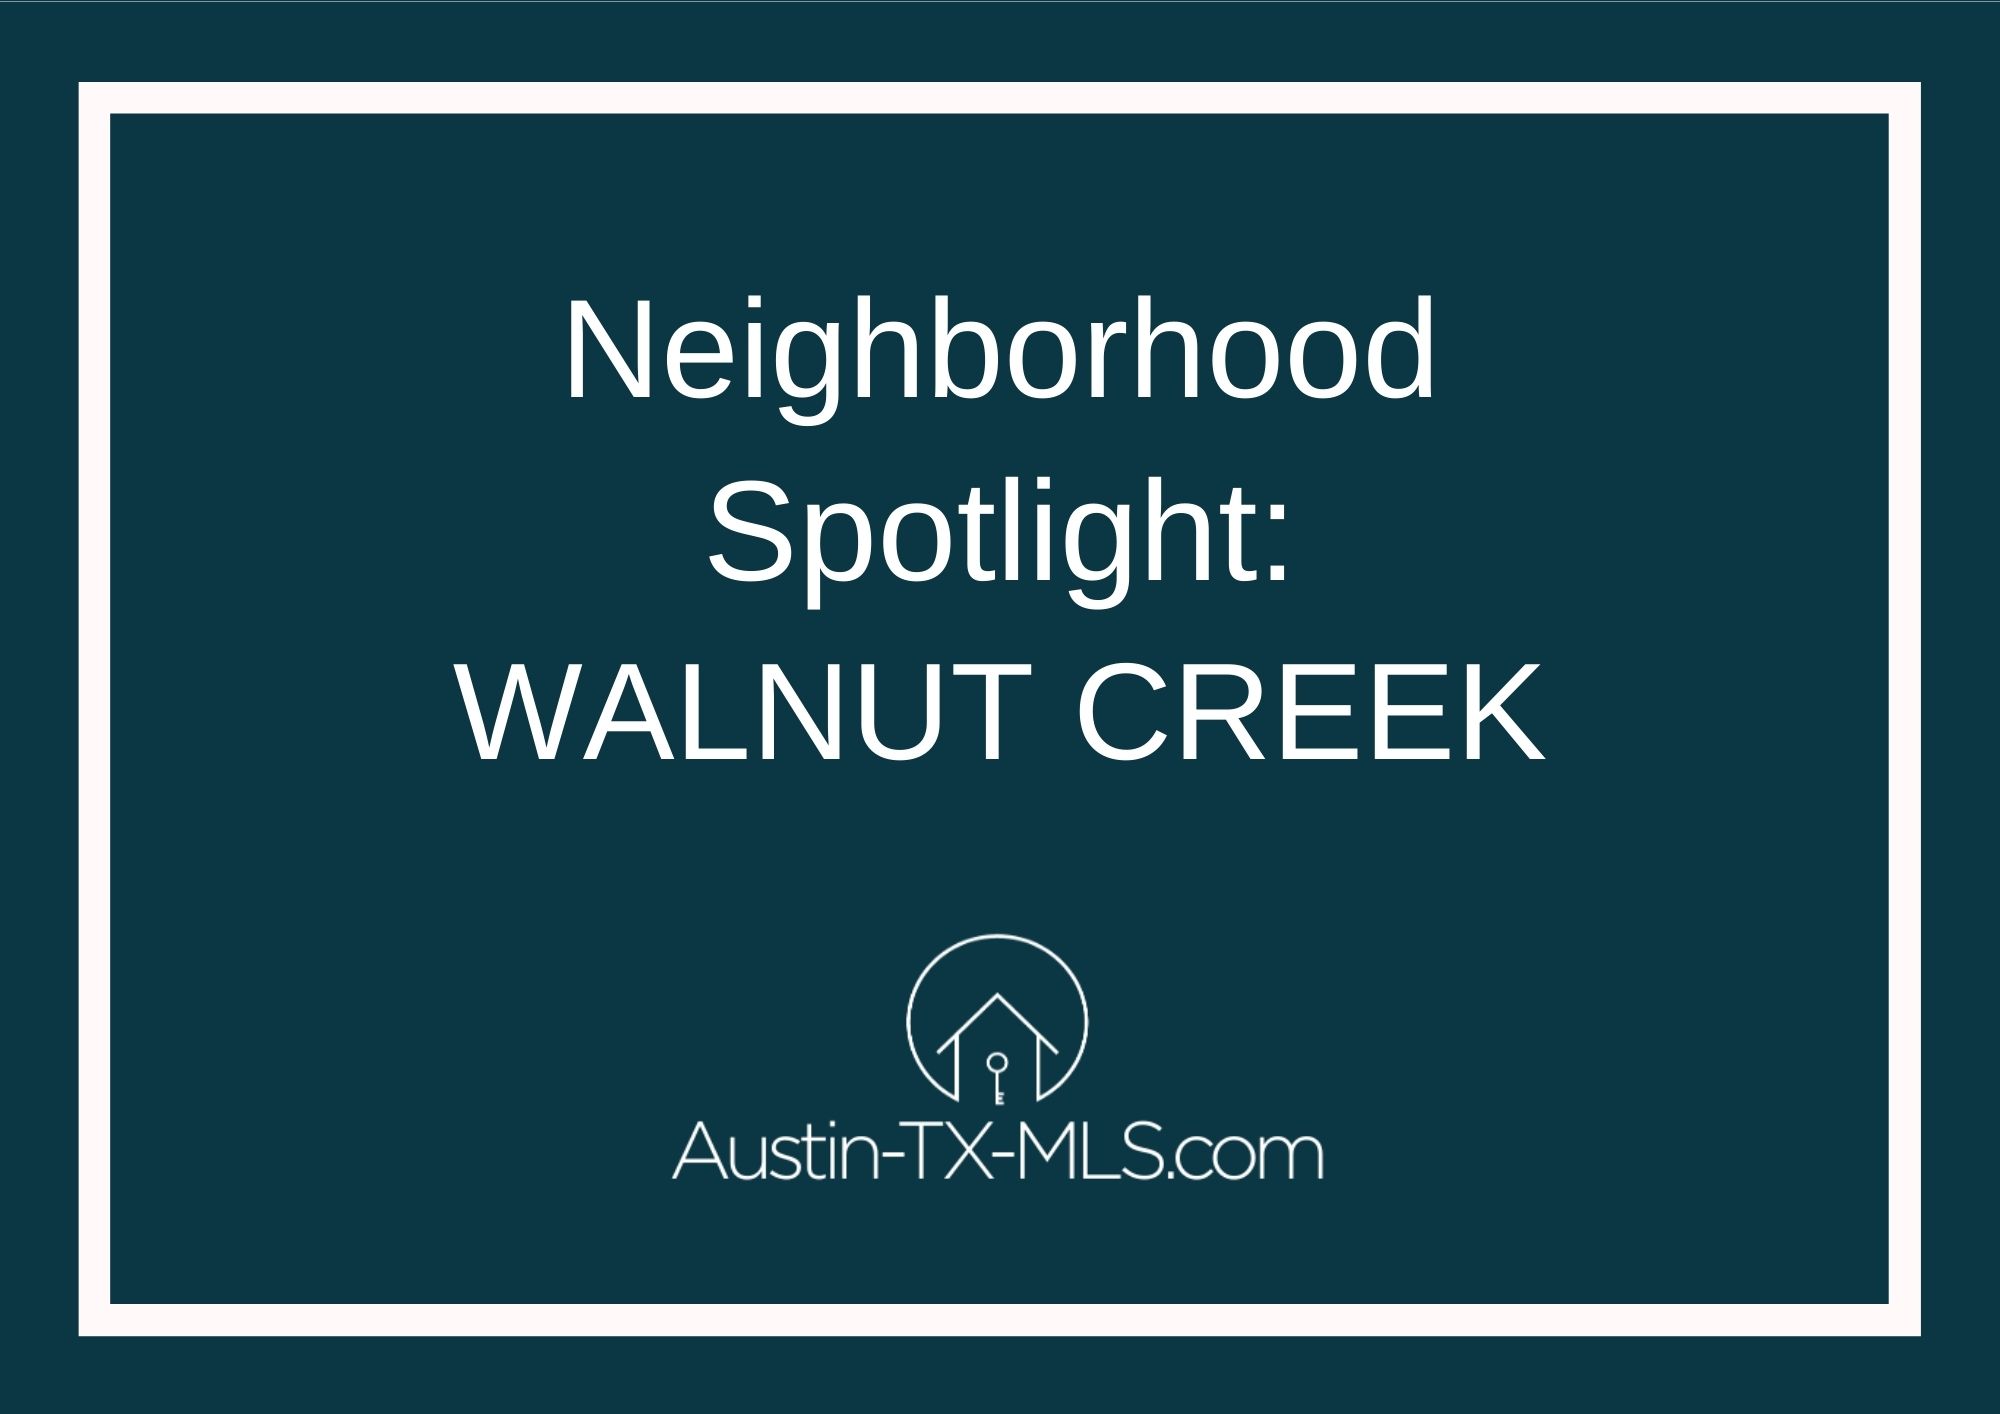 Walnut Creek Neighborhood Spotlight Austin Texas real estate